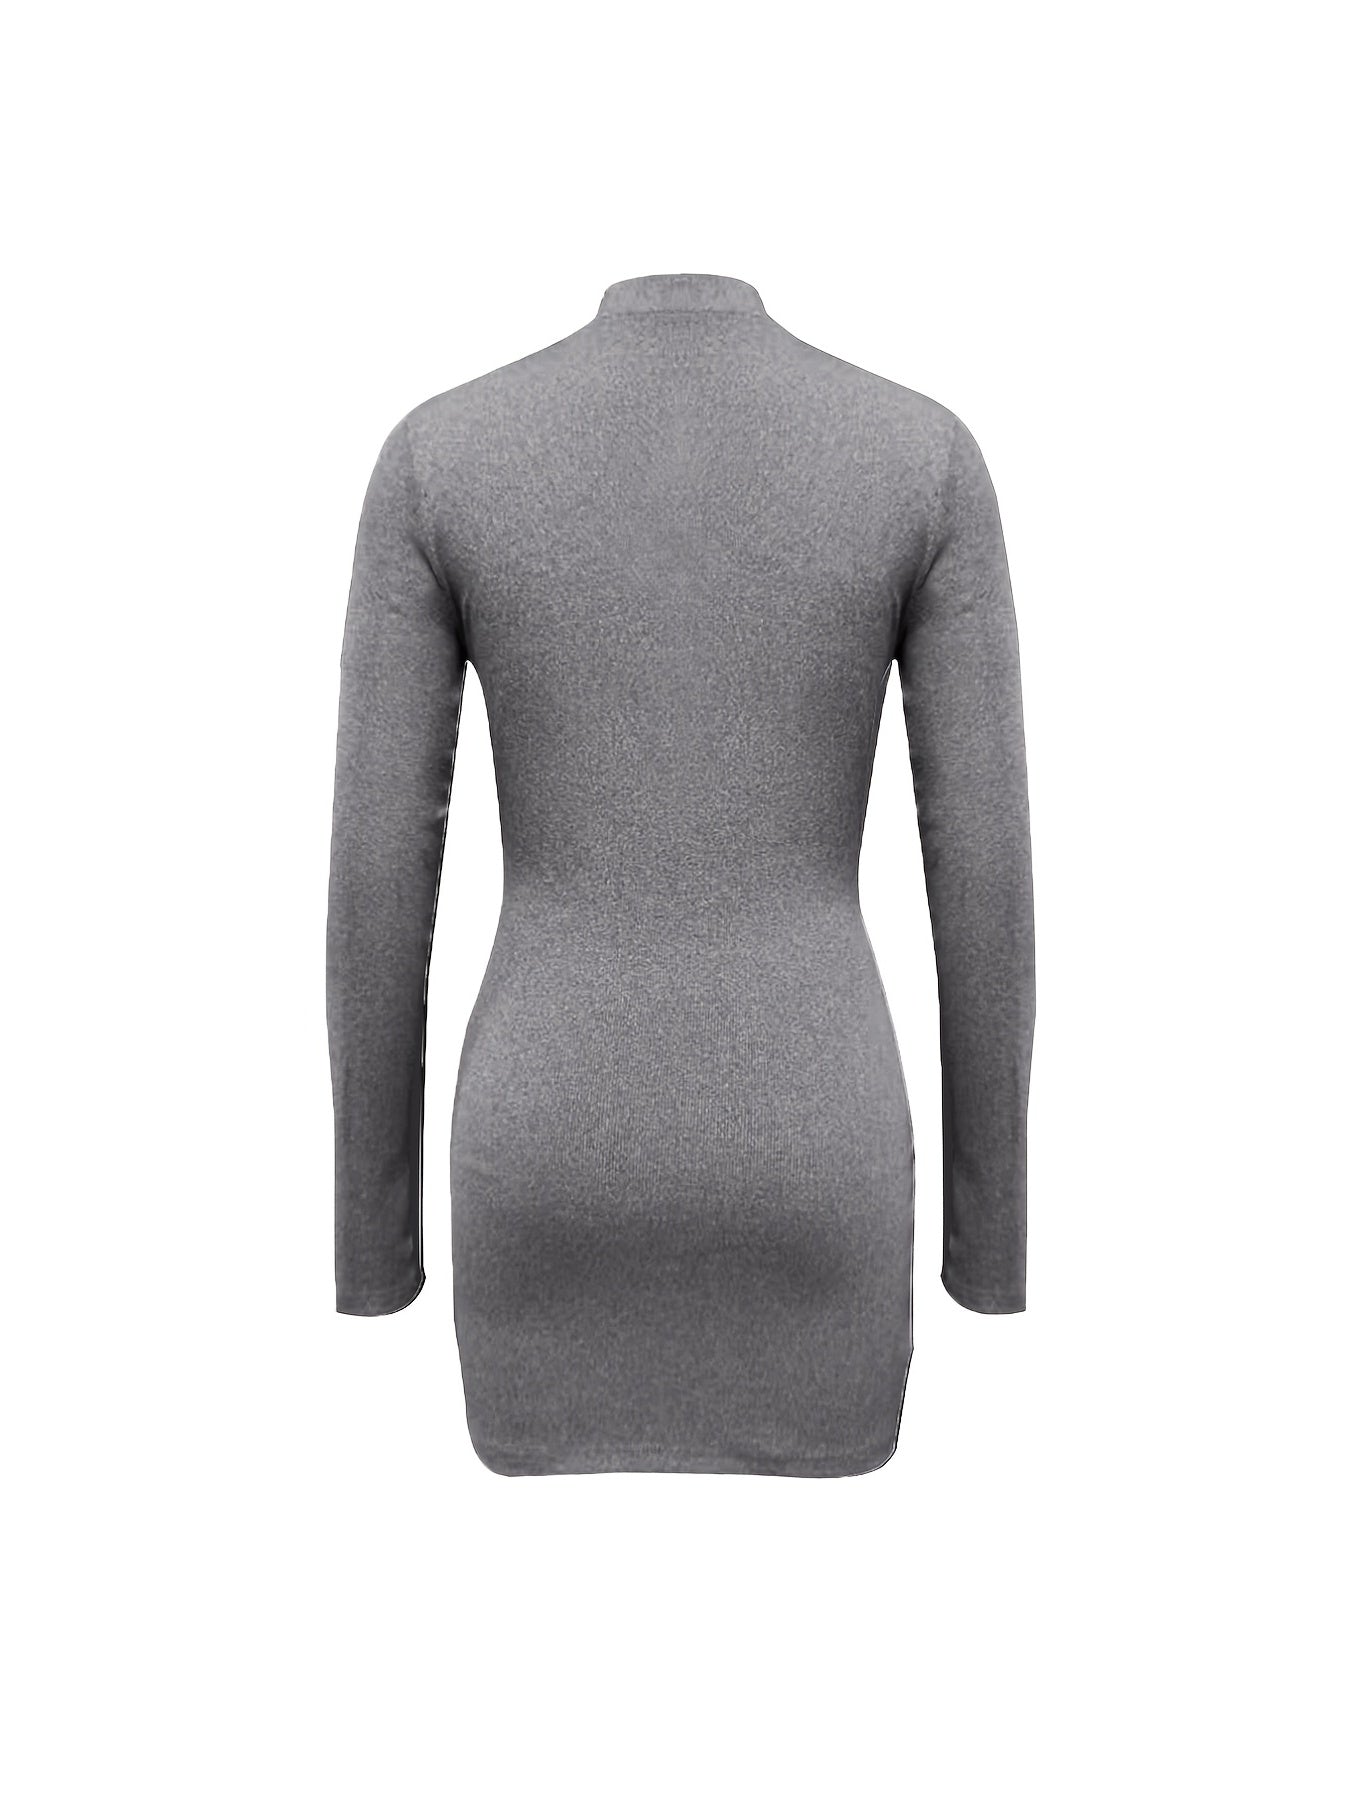 vlovelaw Solid Zipper Dress, Casual Long Sleeve Bodycon Mini Dress, Women's Clothing